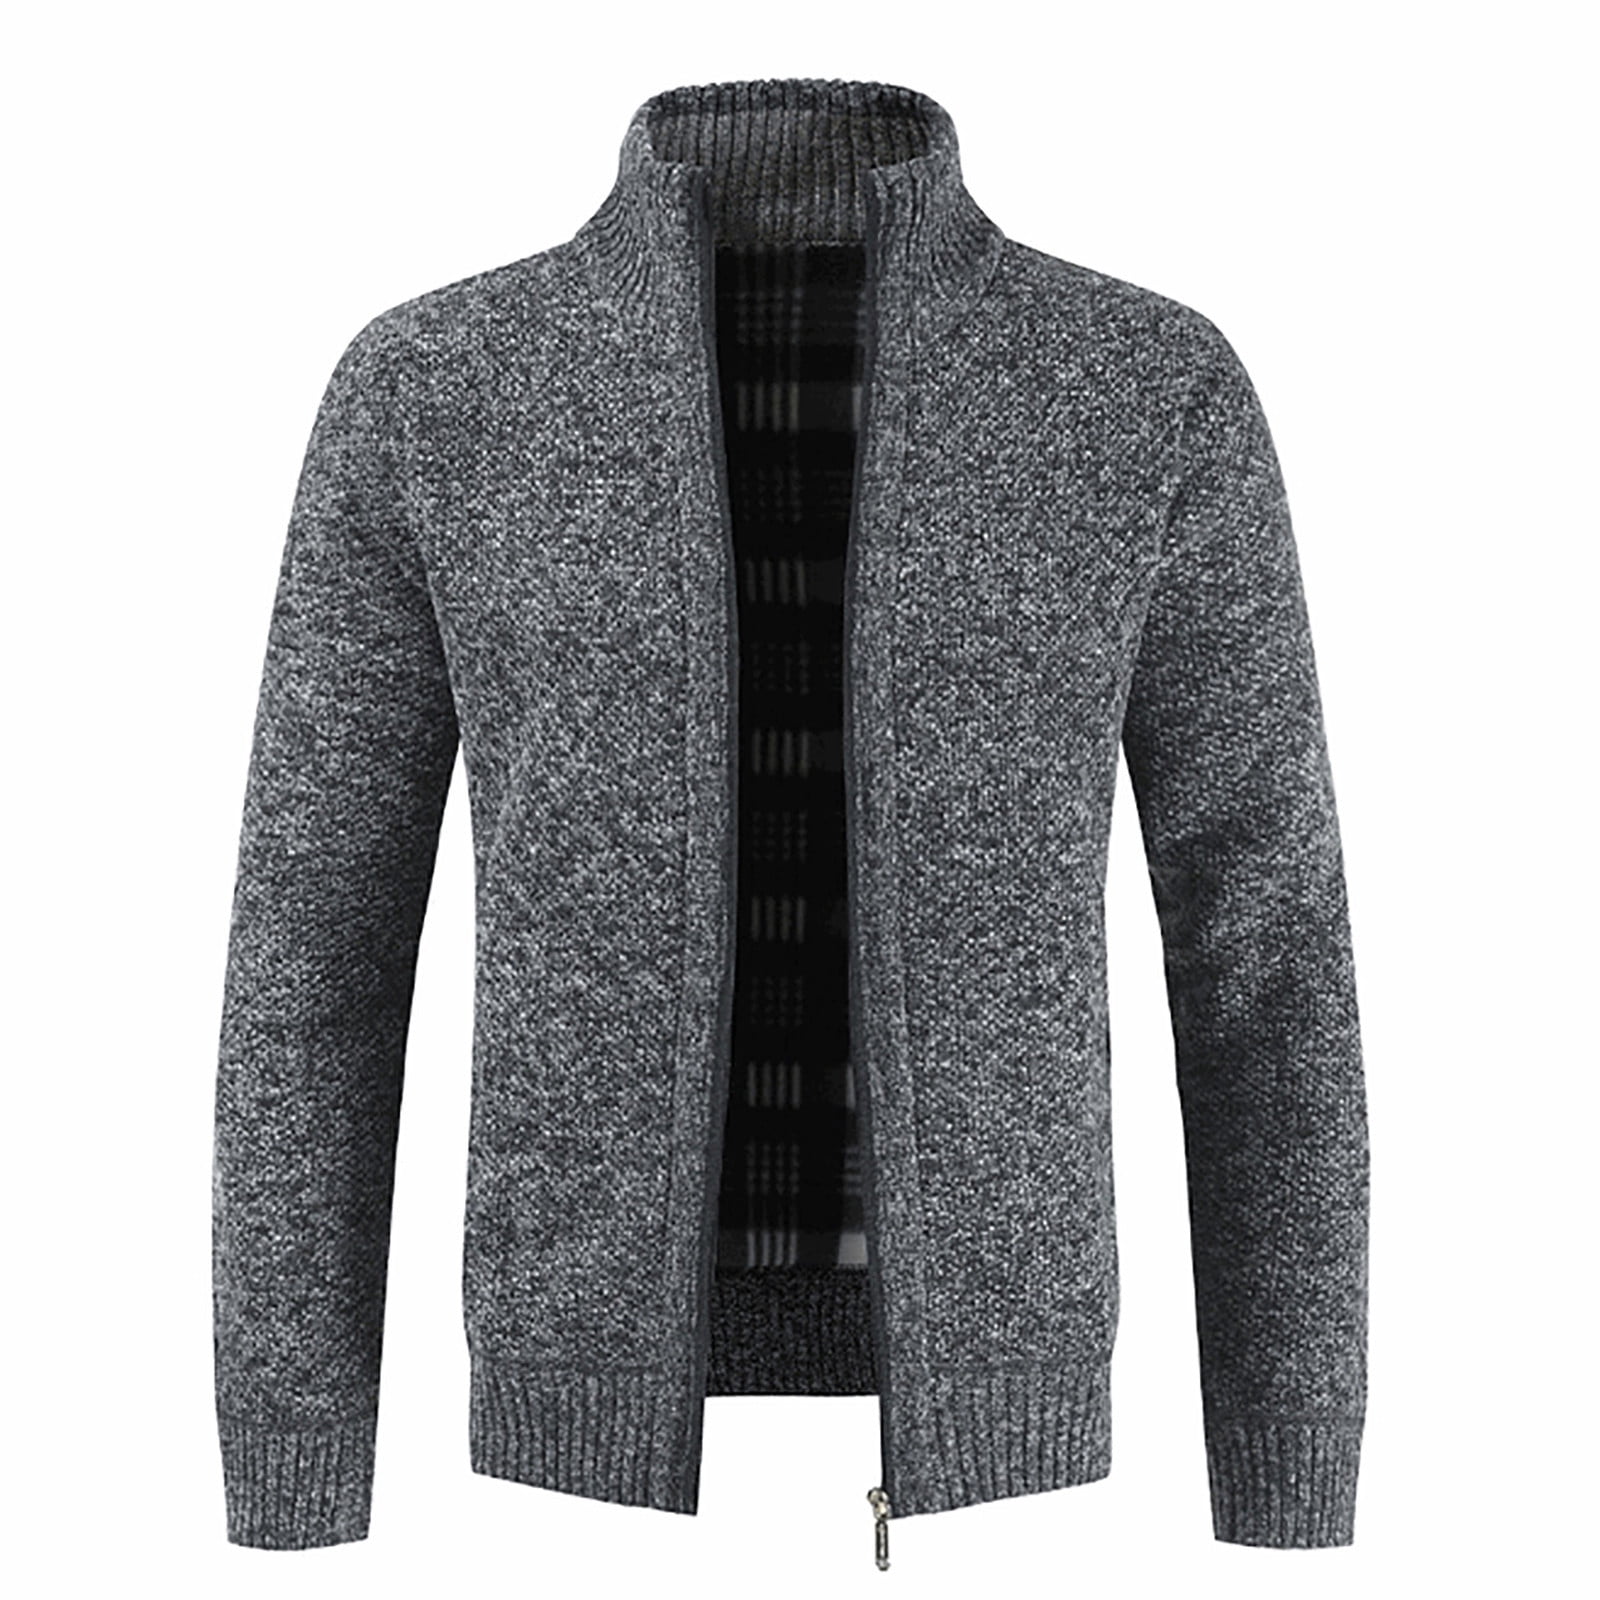 HTNBO Mens Knit Zip Up Sweater Stand Collar Cardigan Zipper Long Sleeve ...